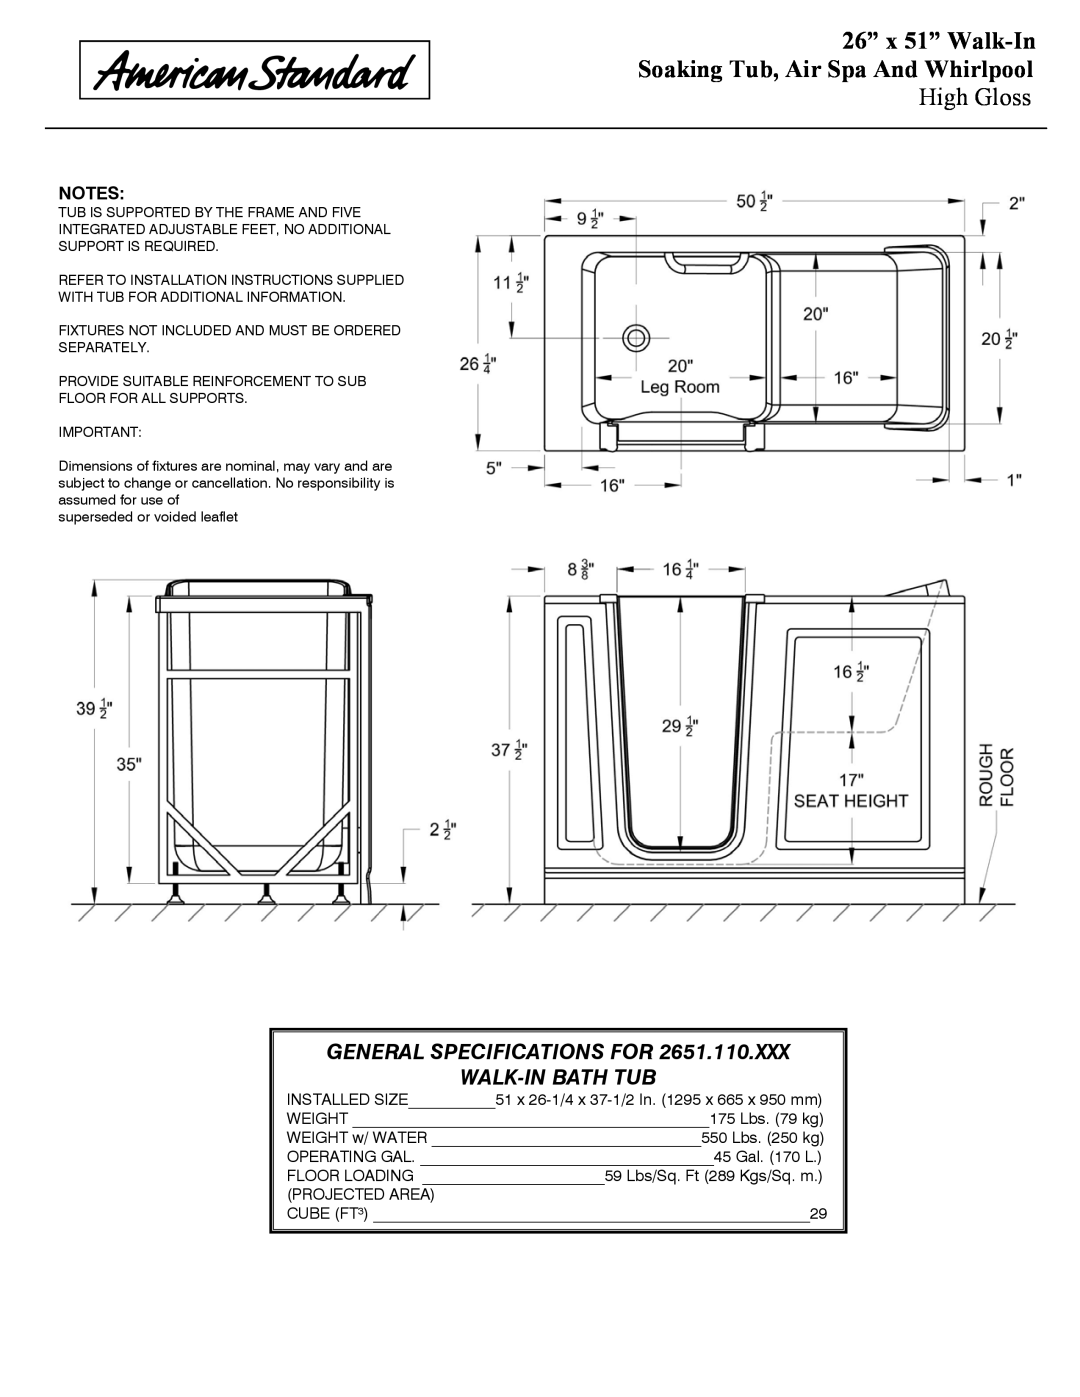 American Standard 2651.110.AXX, 2651.110.WXX dimensions 26” x 51” Walk-In, Soaking Tub, Air Spa And Whirlpool, High Gloss 